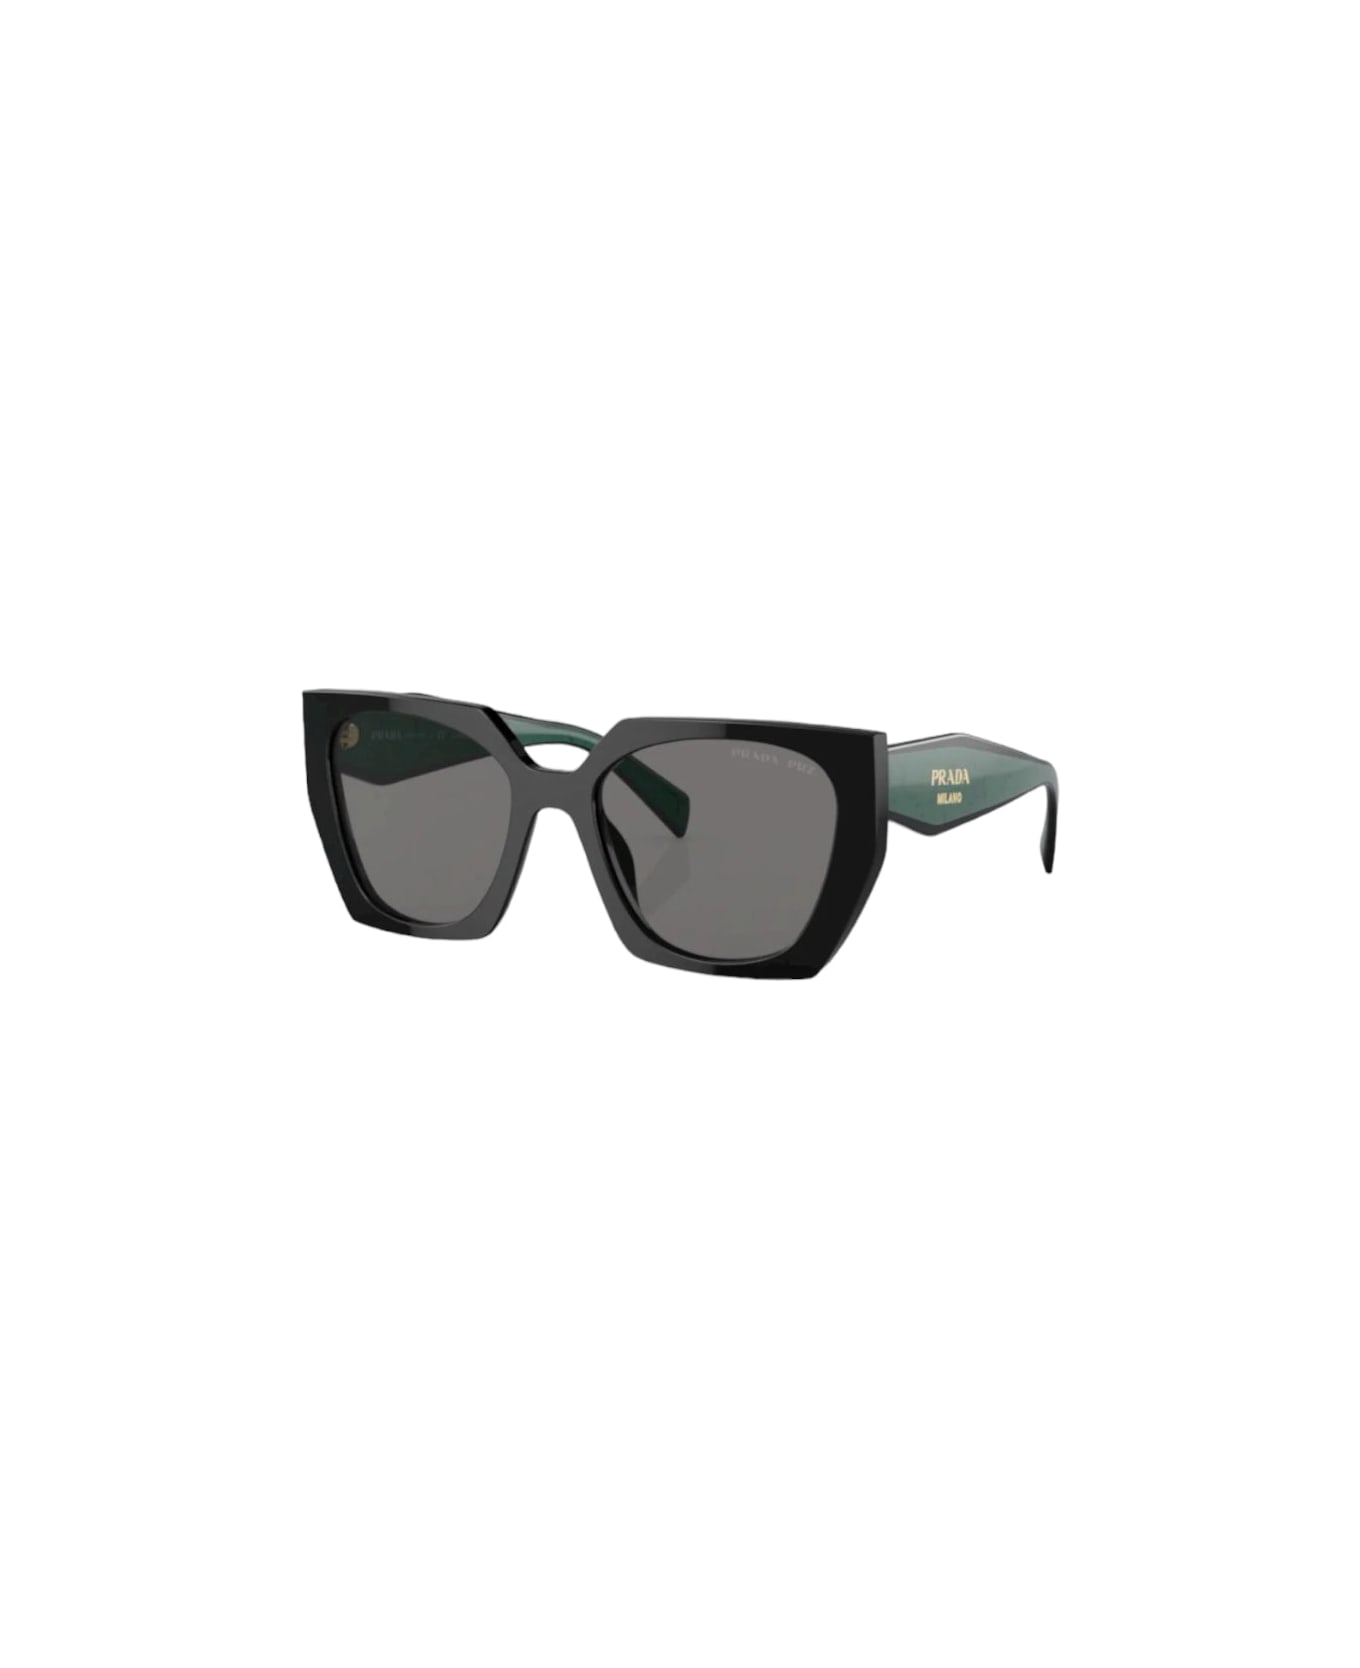 Prada Eyewear Spr 15w - Black Fisherman Sunglasses